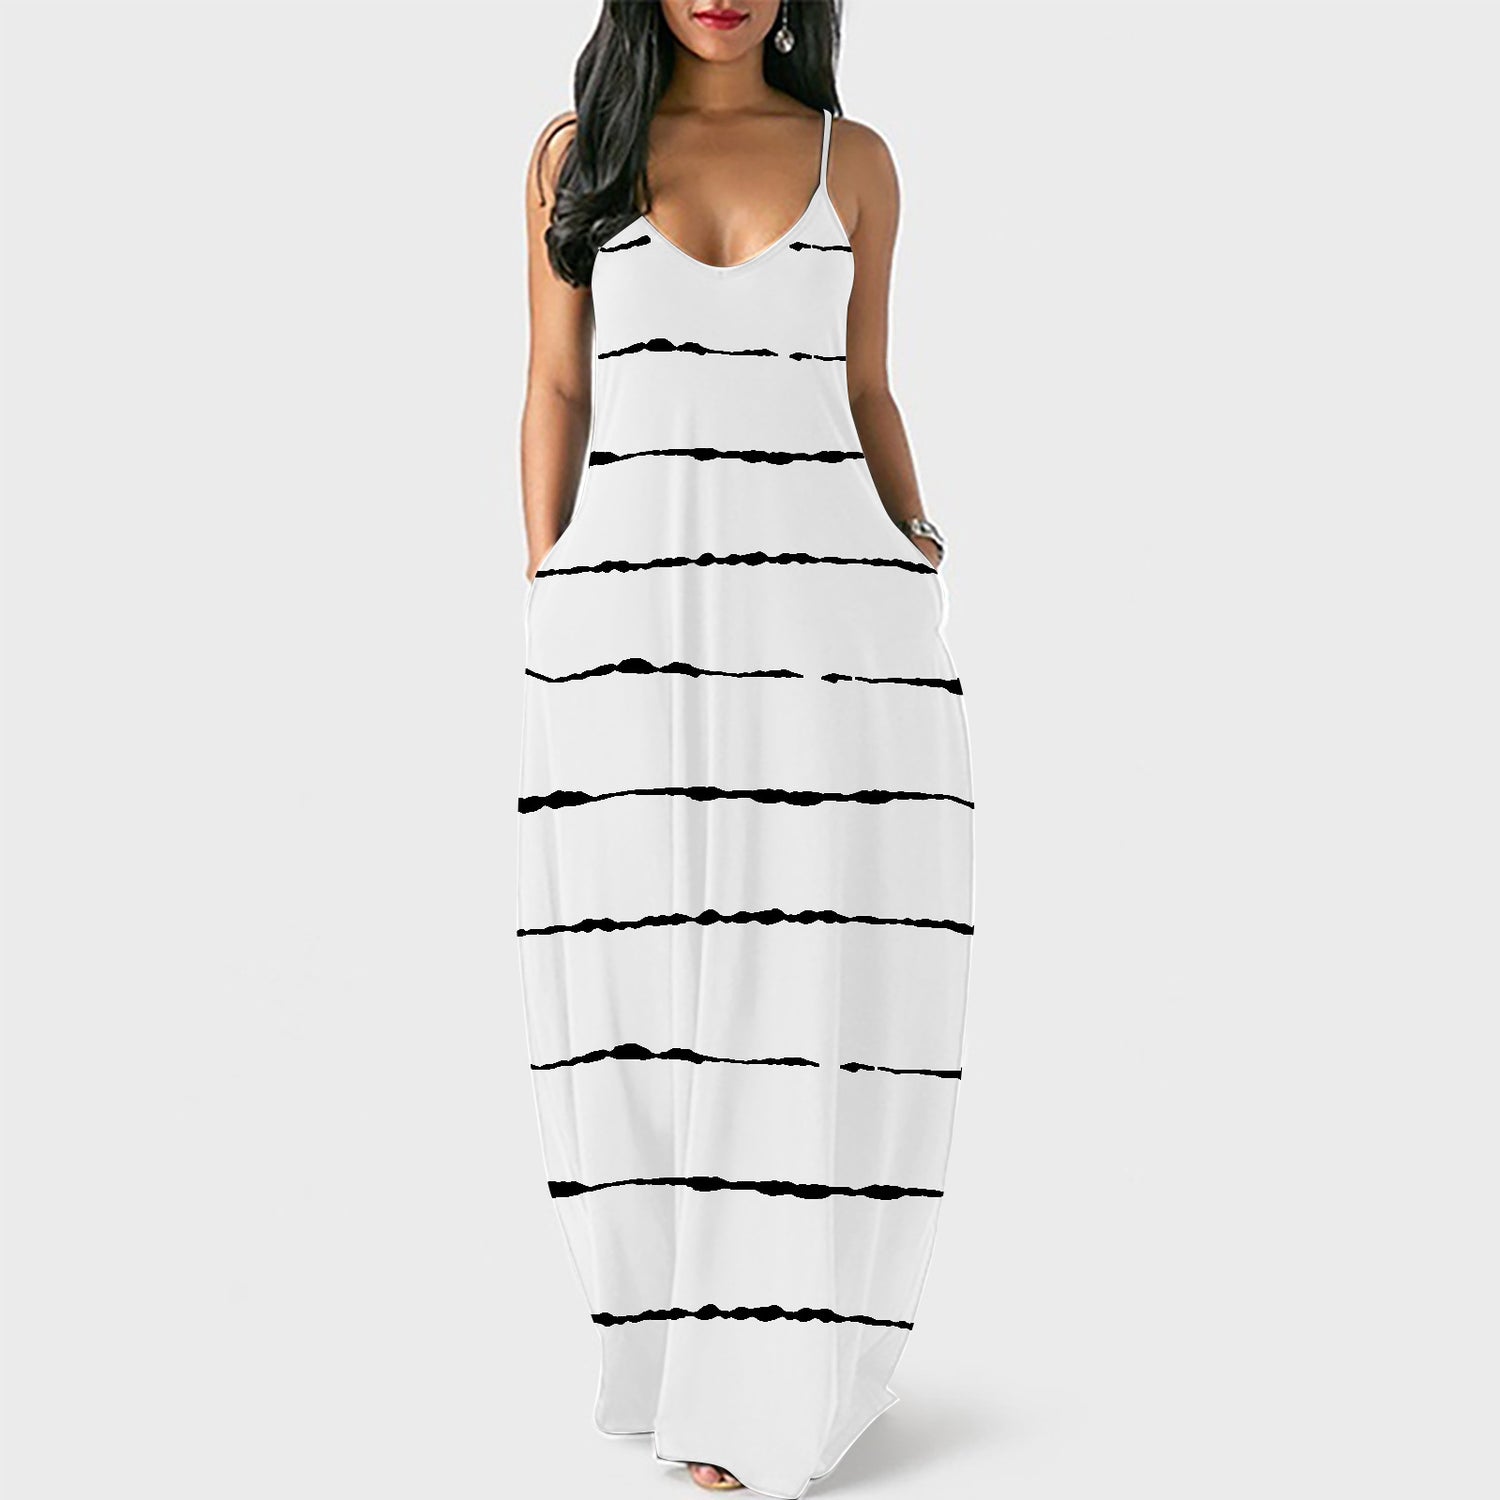 Plus Size Women's Striped Suspender Dress  dresses Thecurvestory